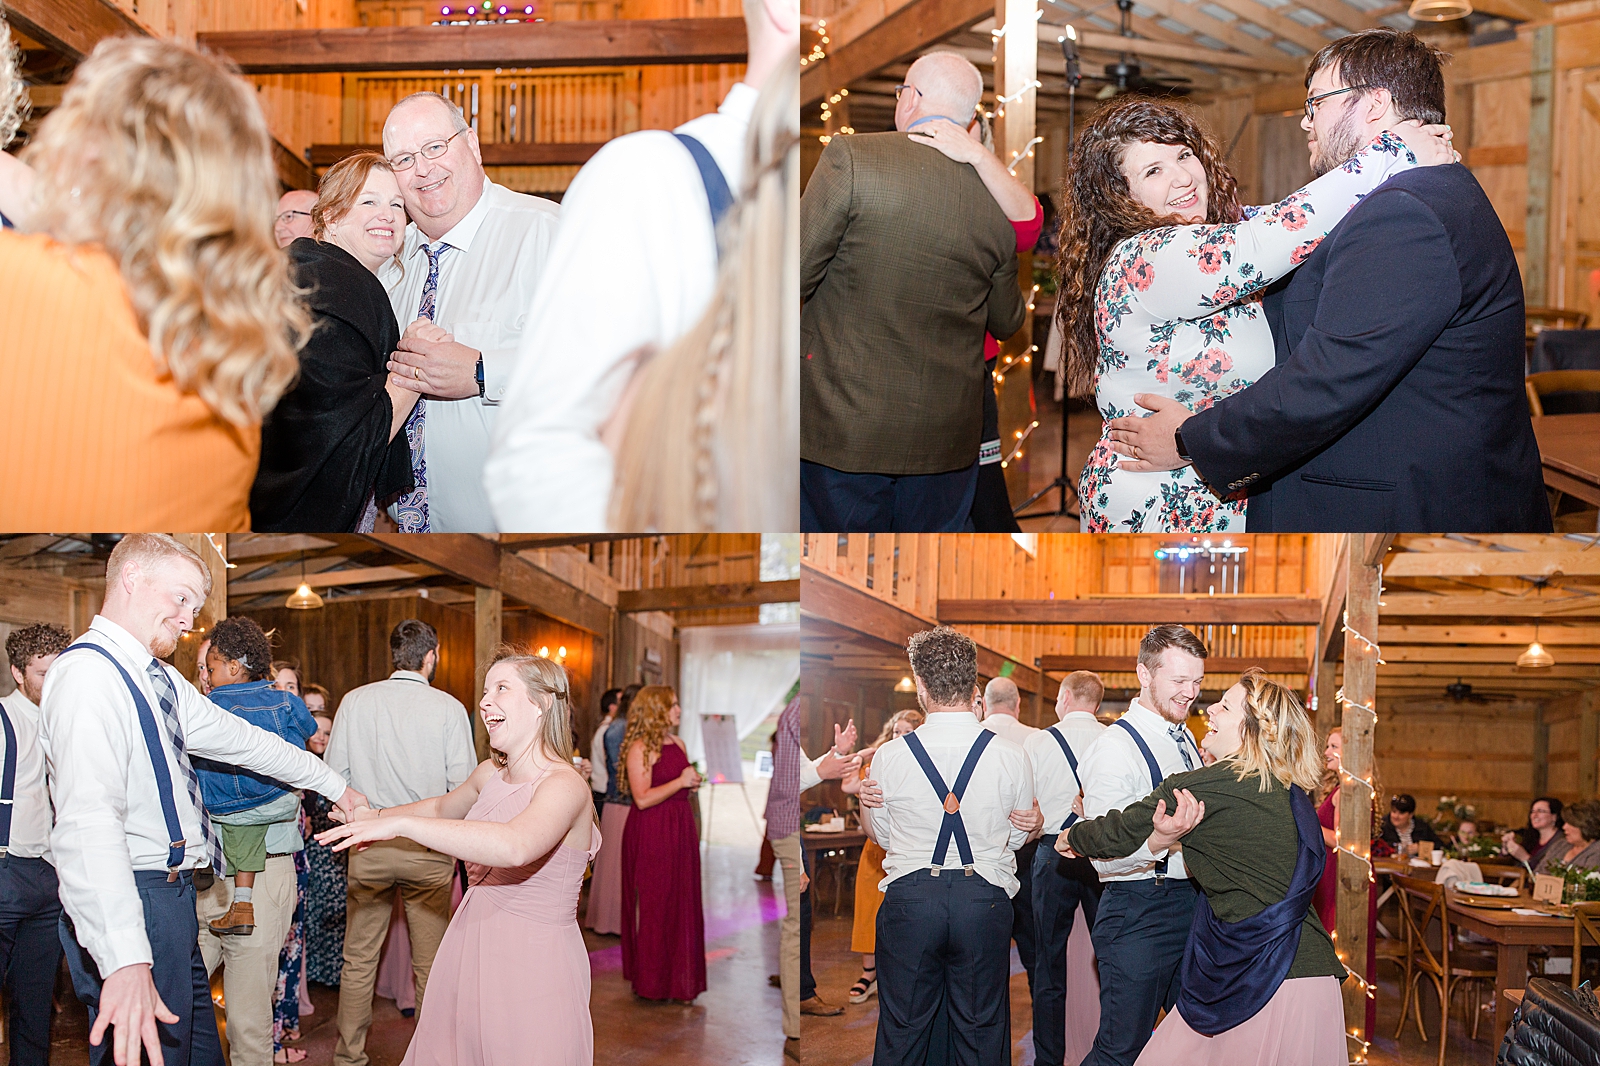 Macedonia Hills Wedding Reception Guests Dancing photos